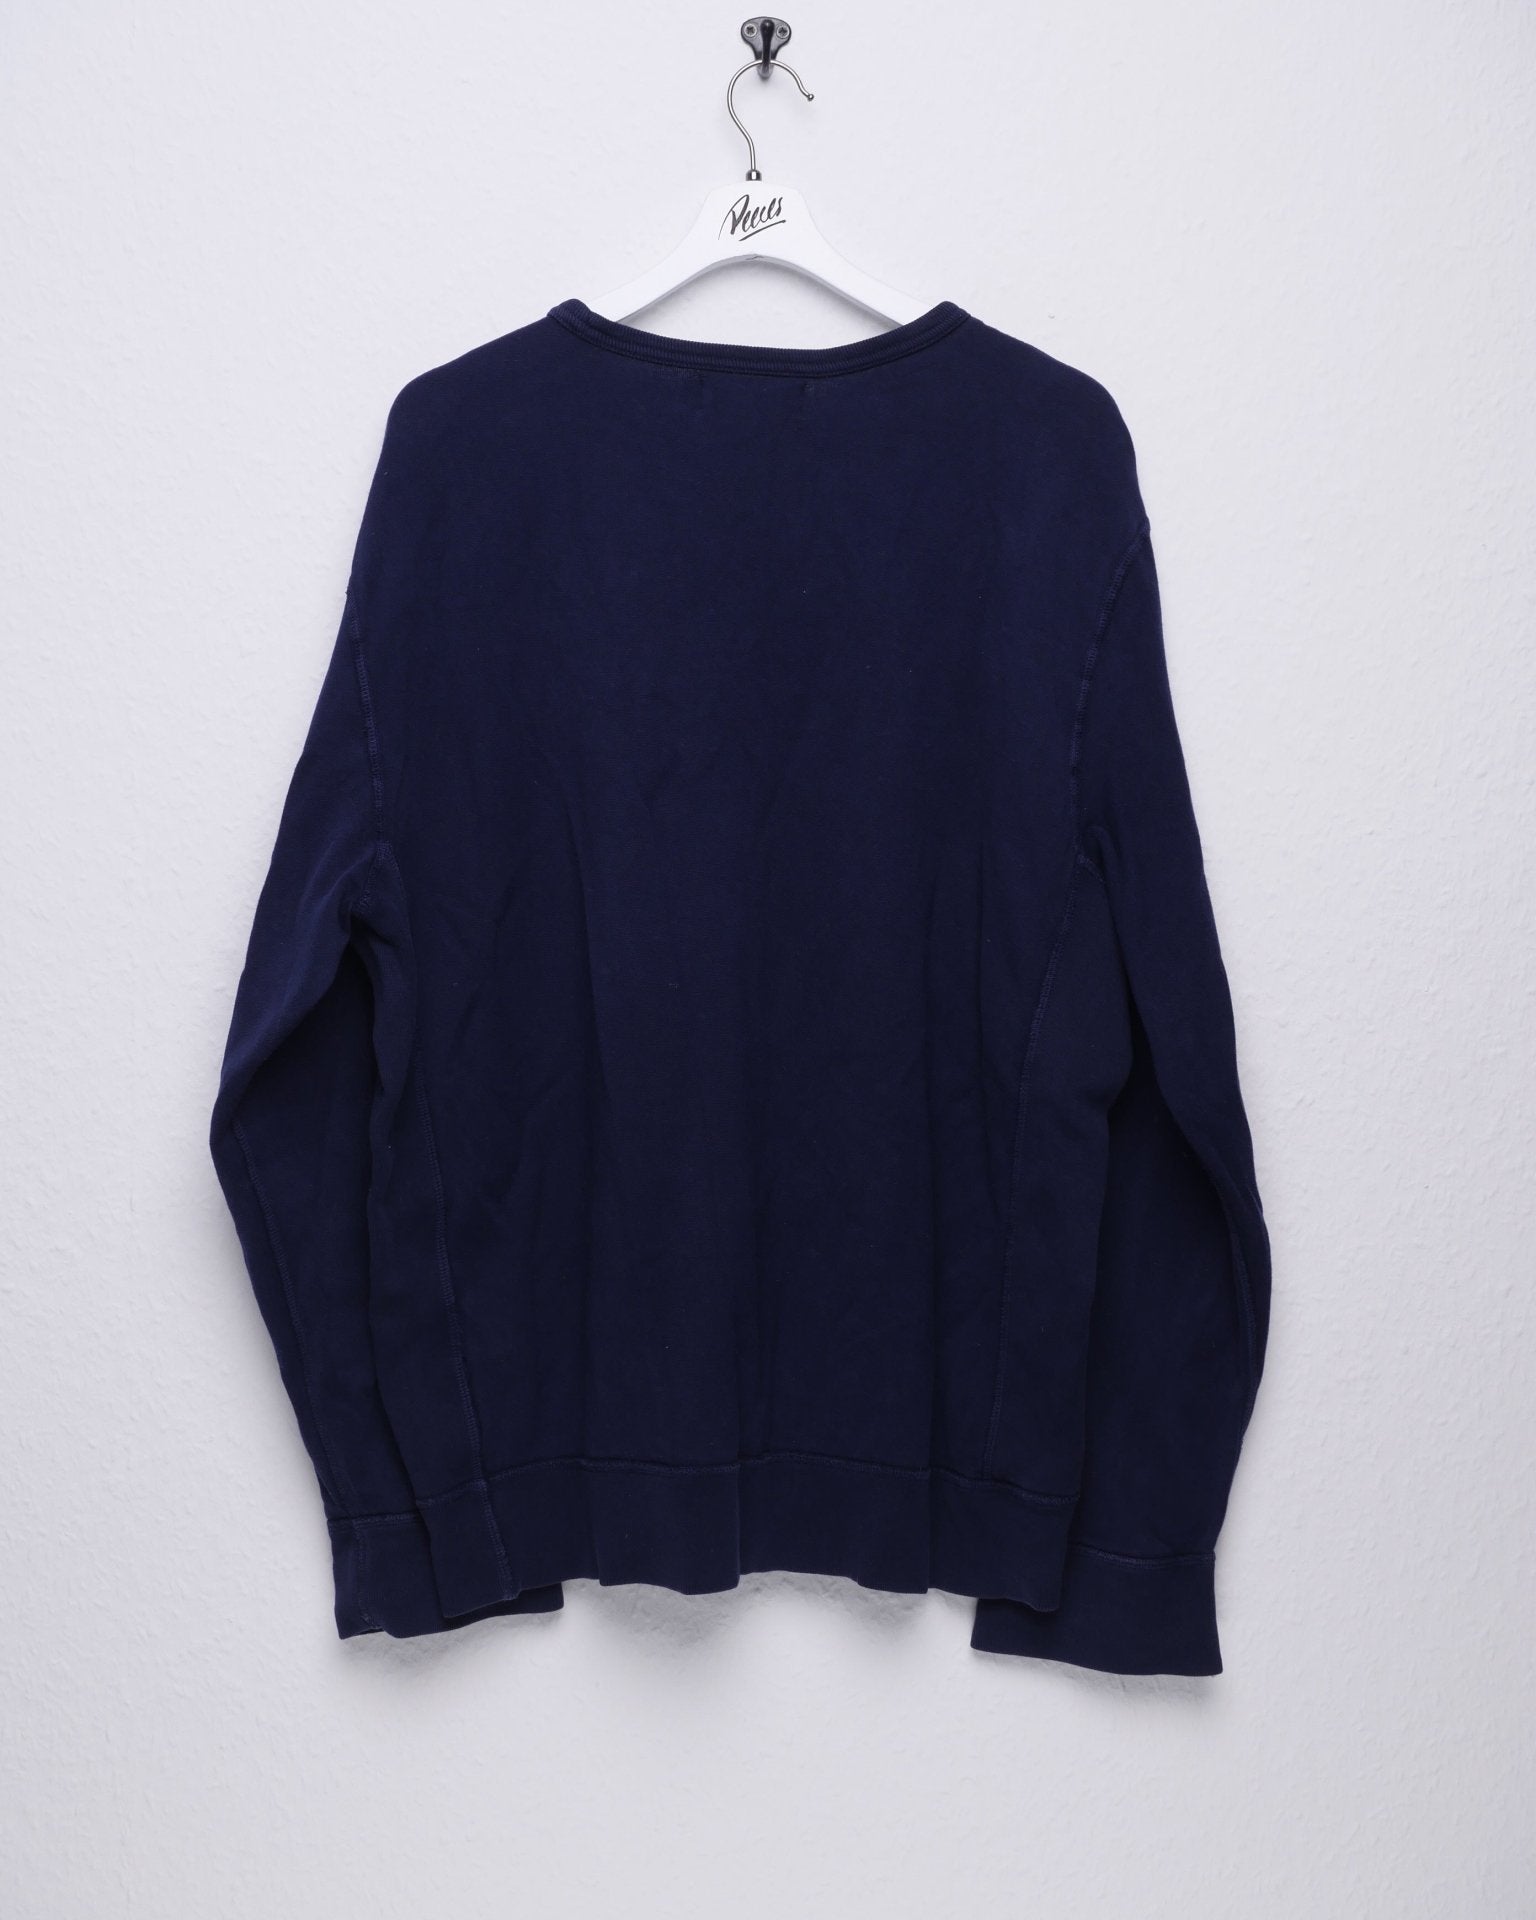 polo navy basic Vintage Sweater - Peeces